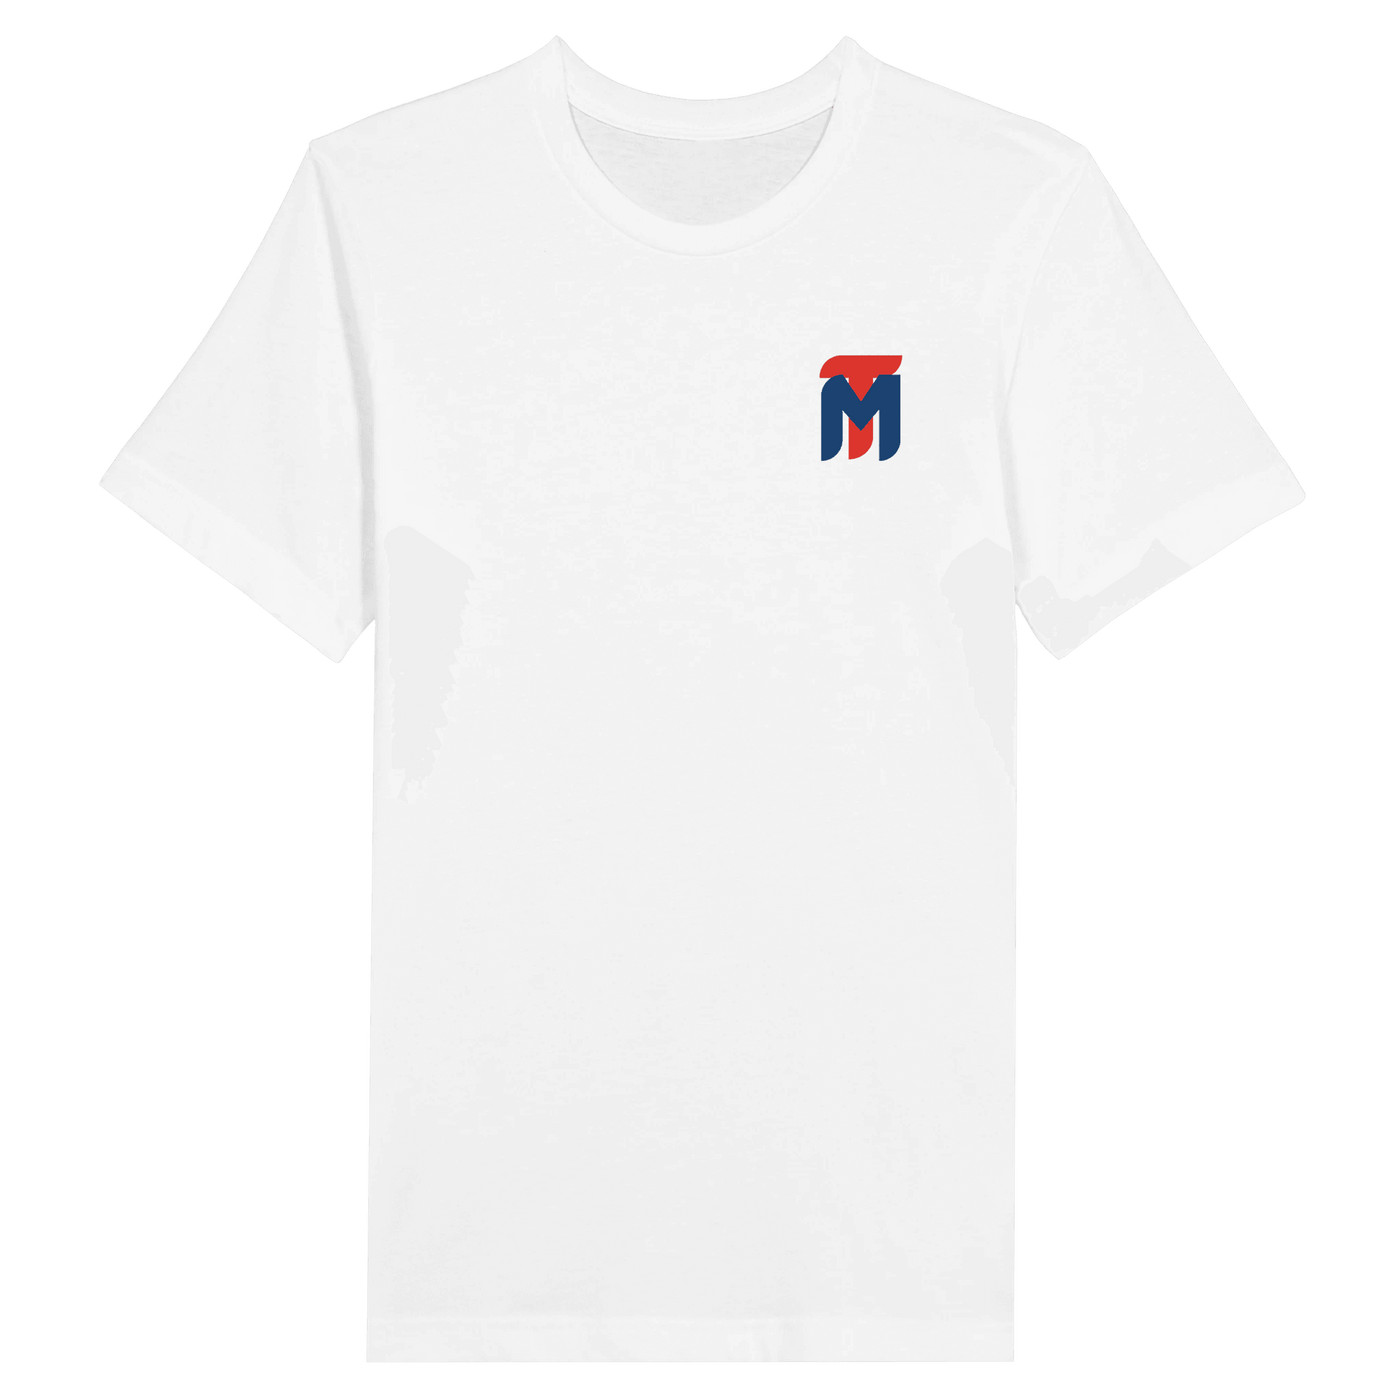 Mortal Combat - Cotton T-Shirt - Muay Thailand